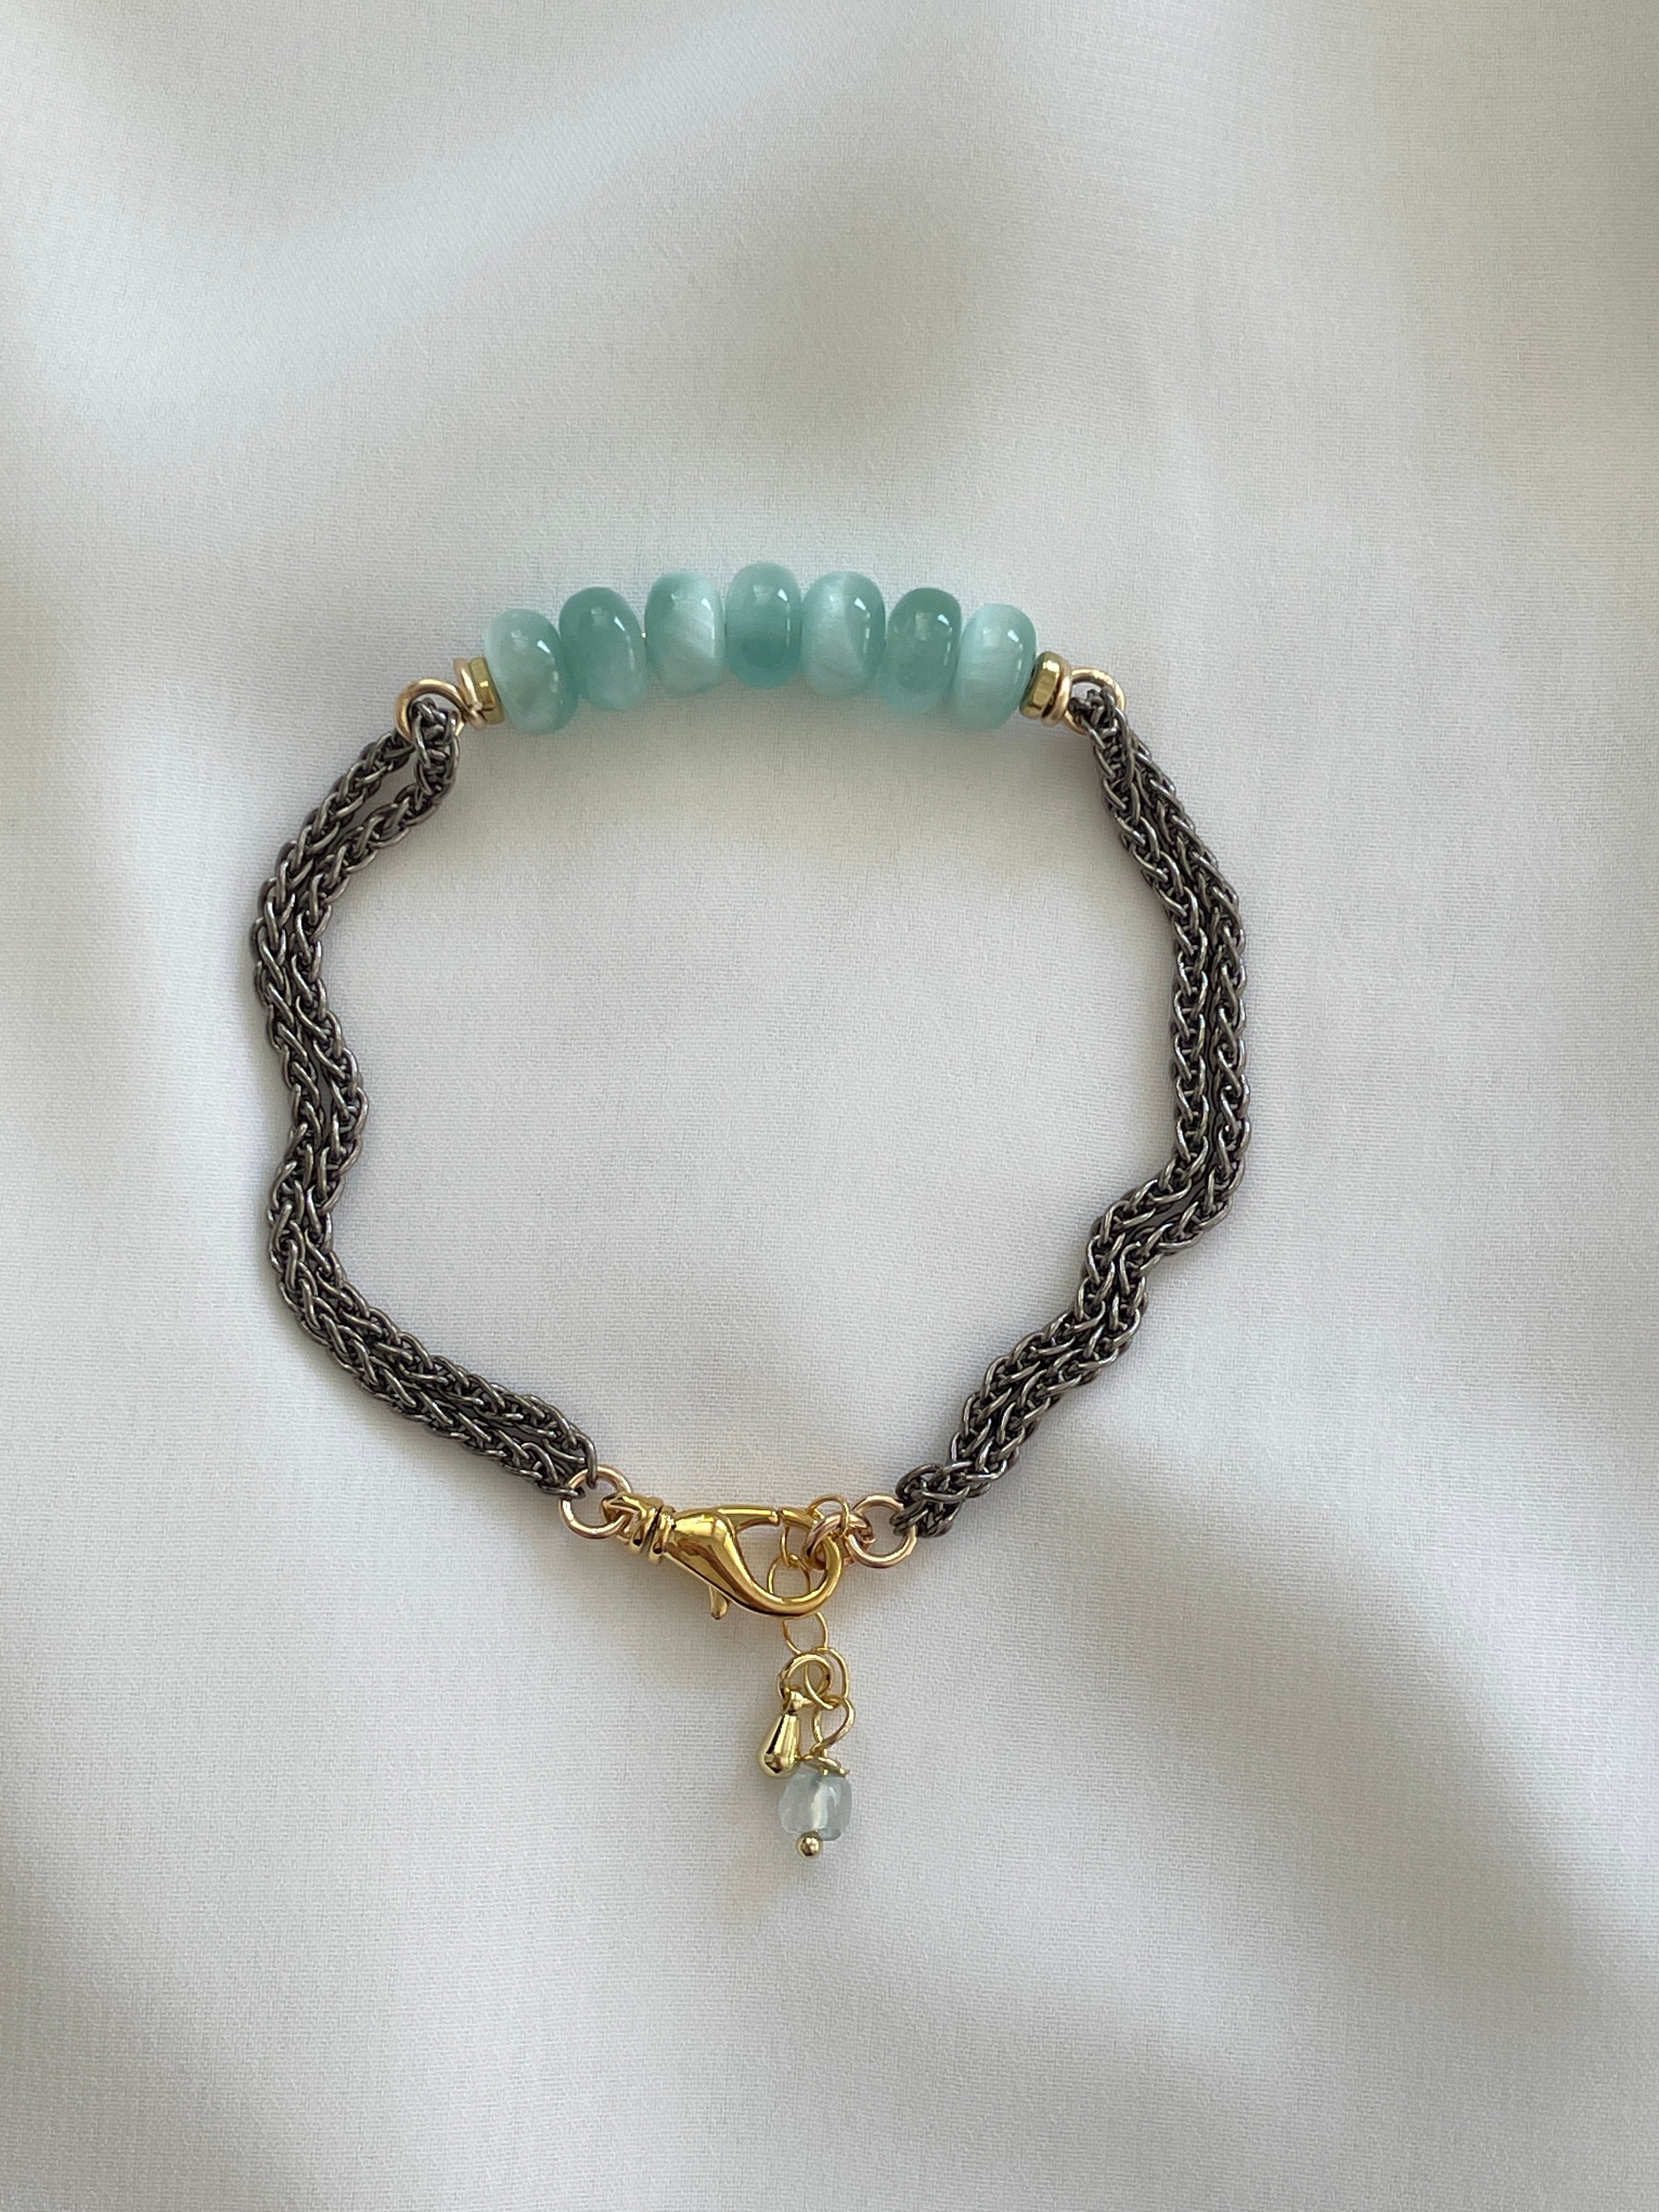 Aqua Moonstone Bracelet